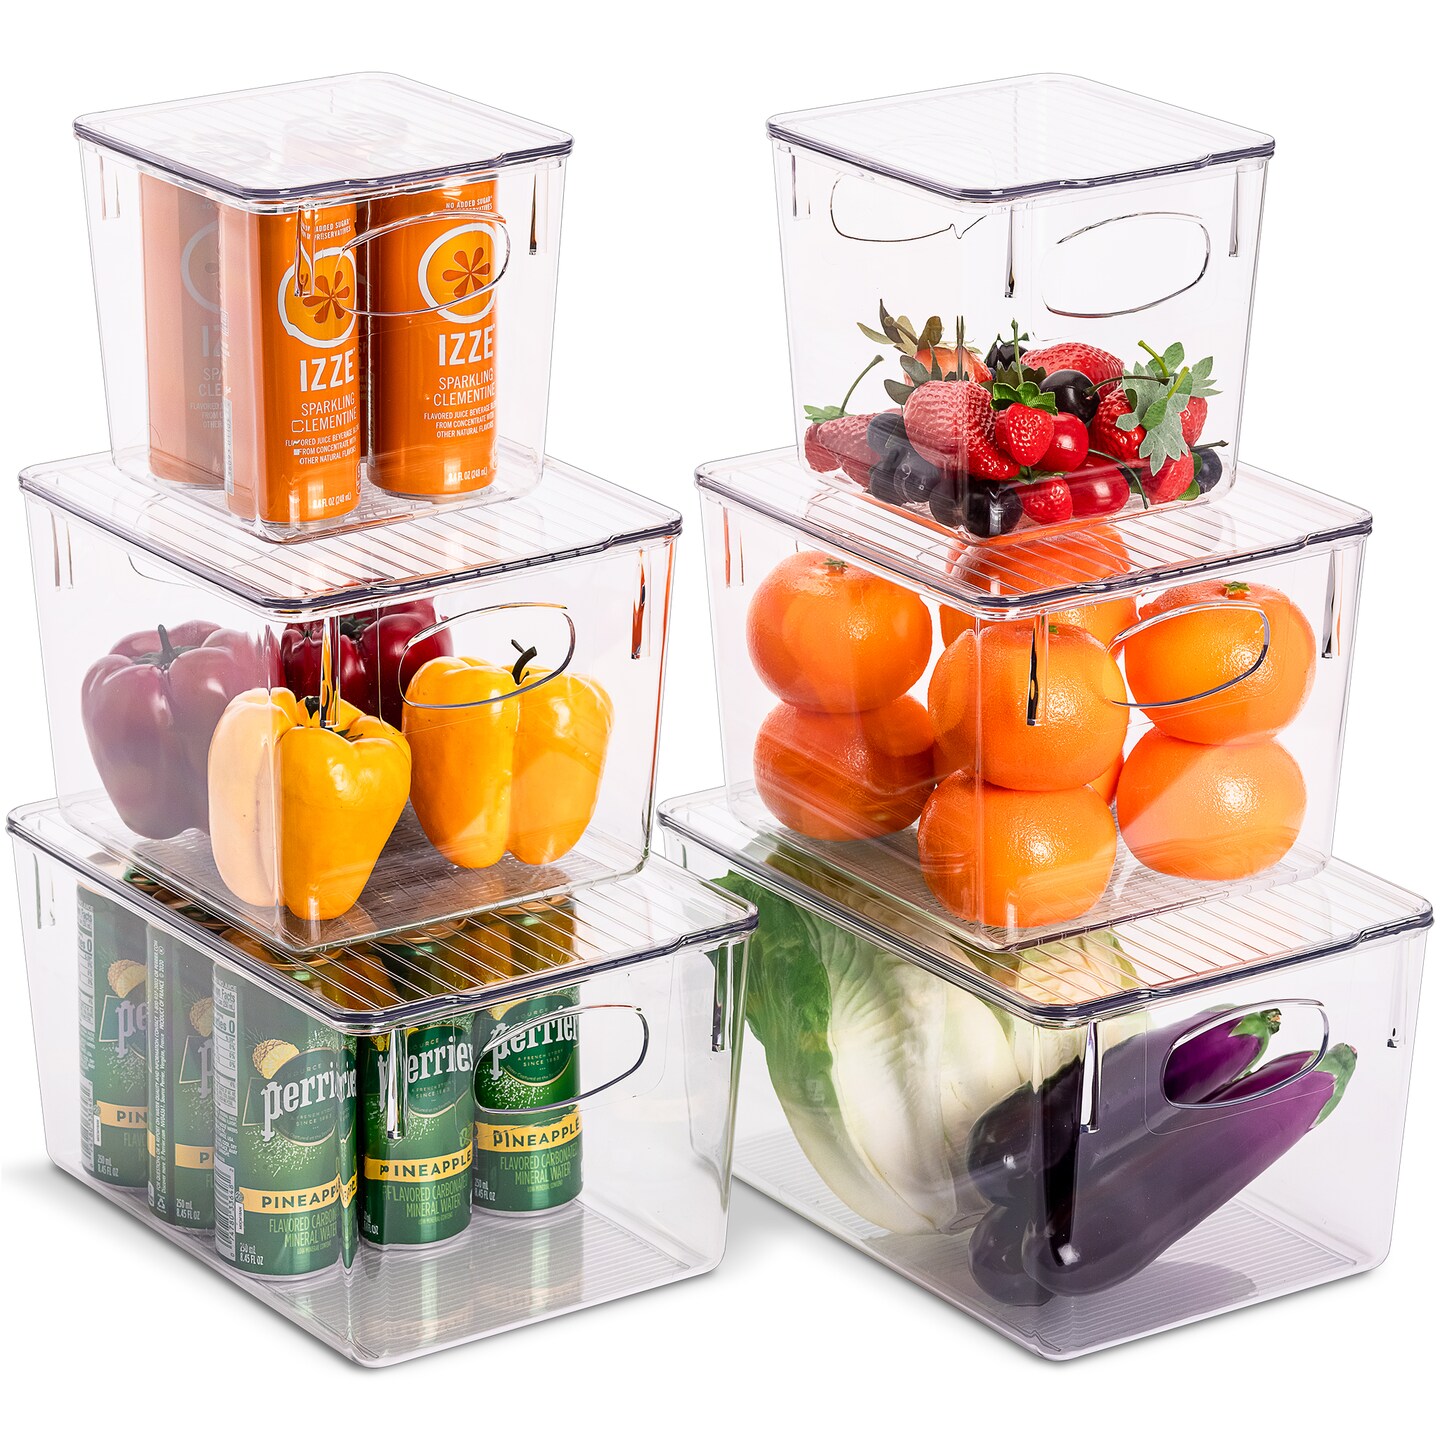 Refrigerator Organizer Organization and Storage Bins Box with